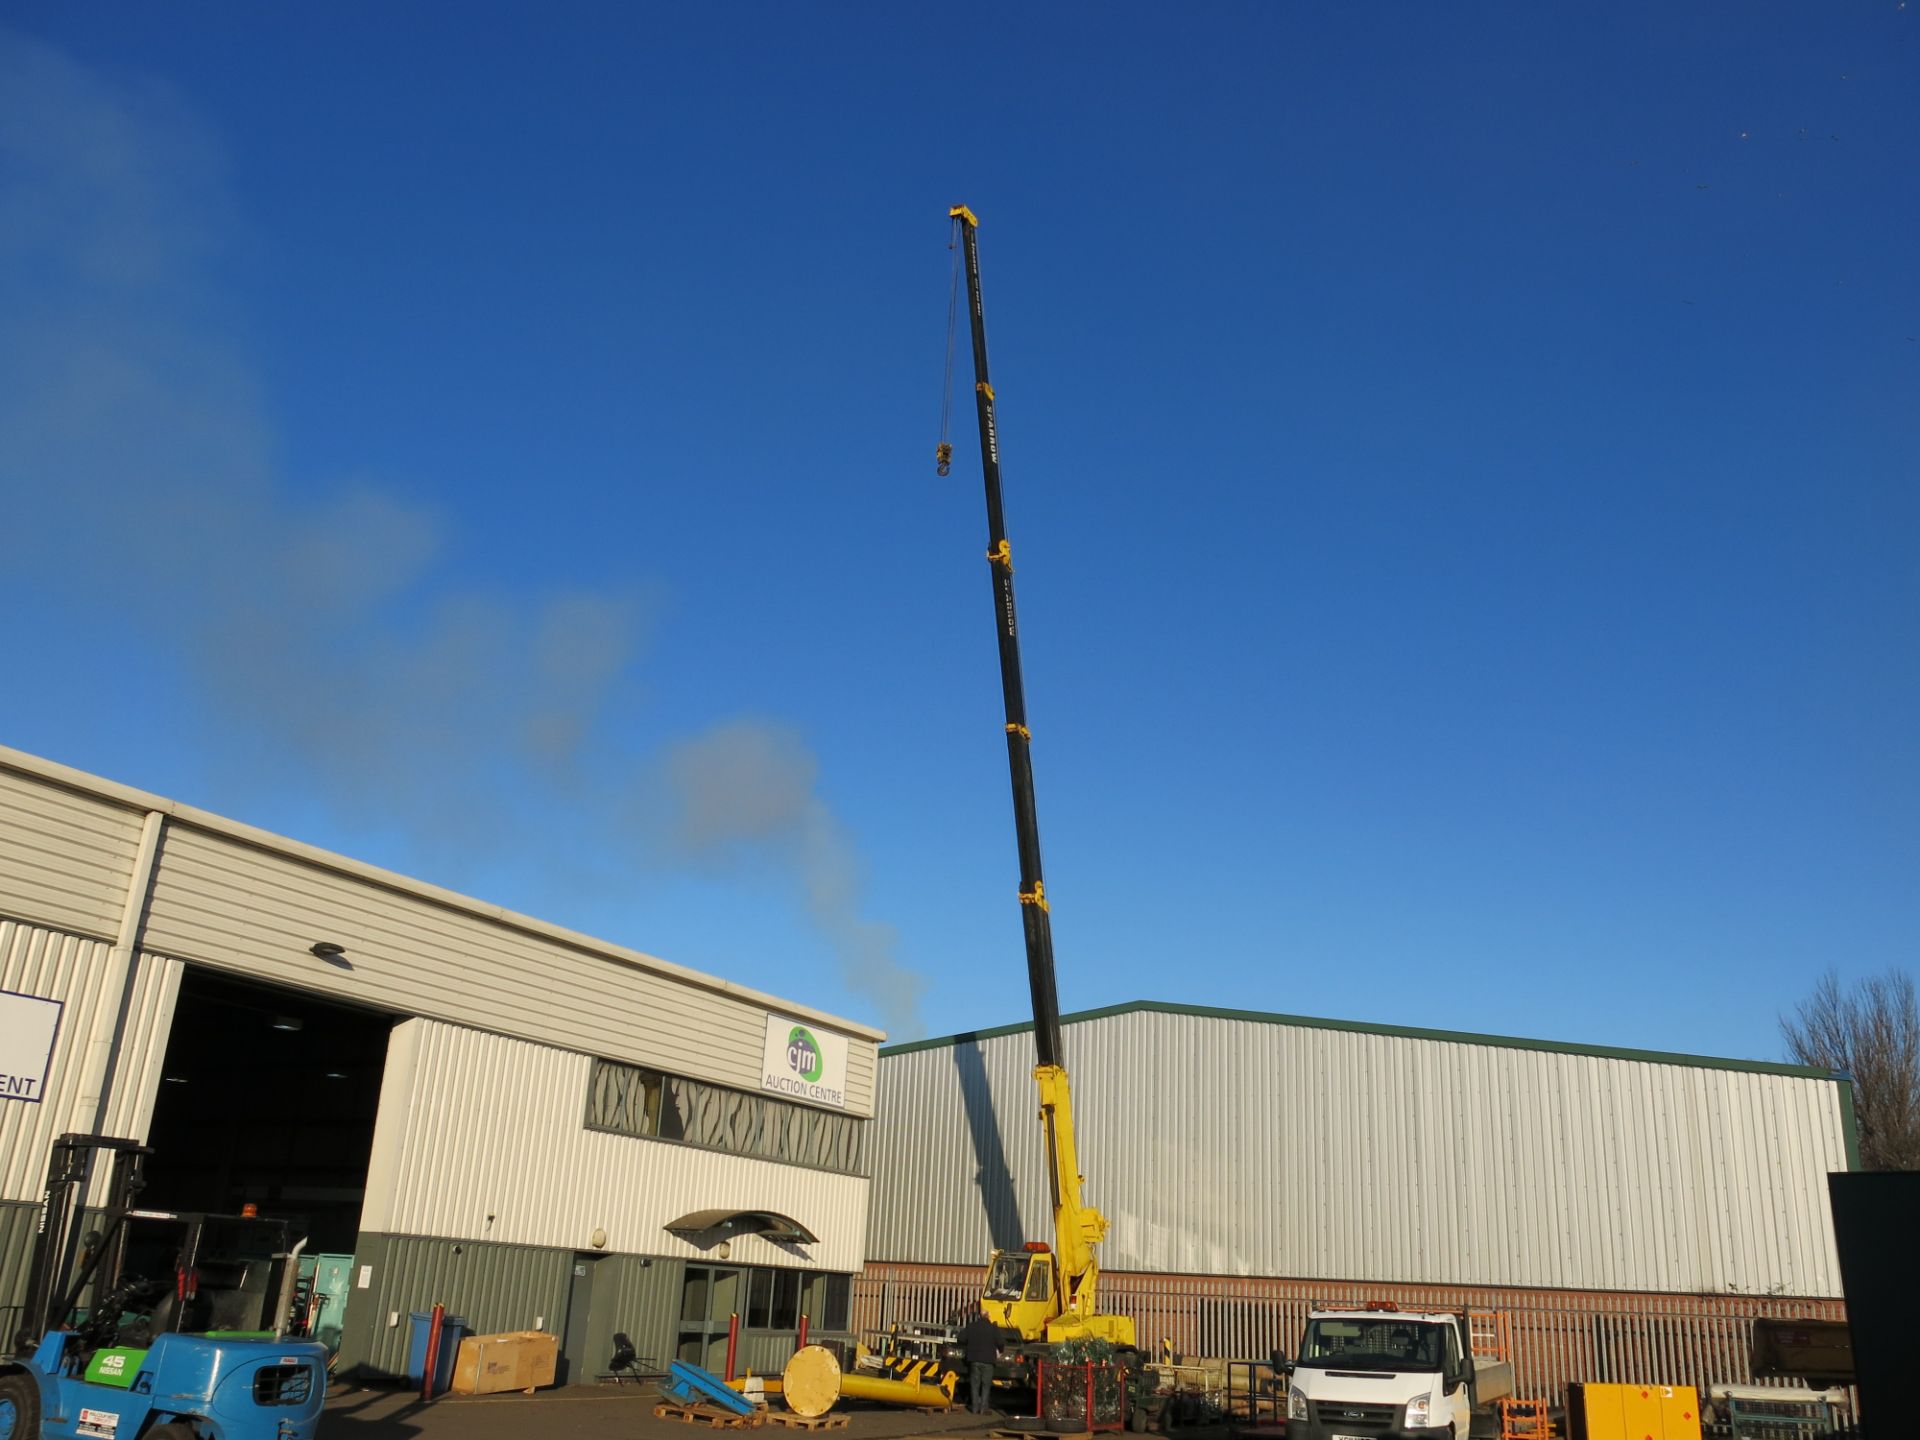 * A Kobelco RK70M-2 7 ton telescopic crane. Max capacity 7T at 1M, YOM 1992, total weight 11.5 - Bild 18 aus 18